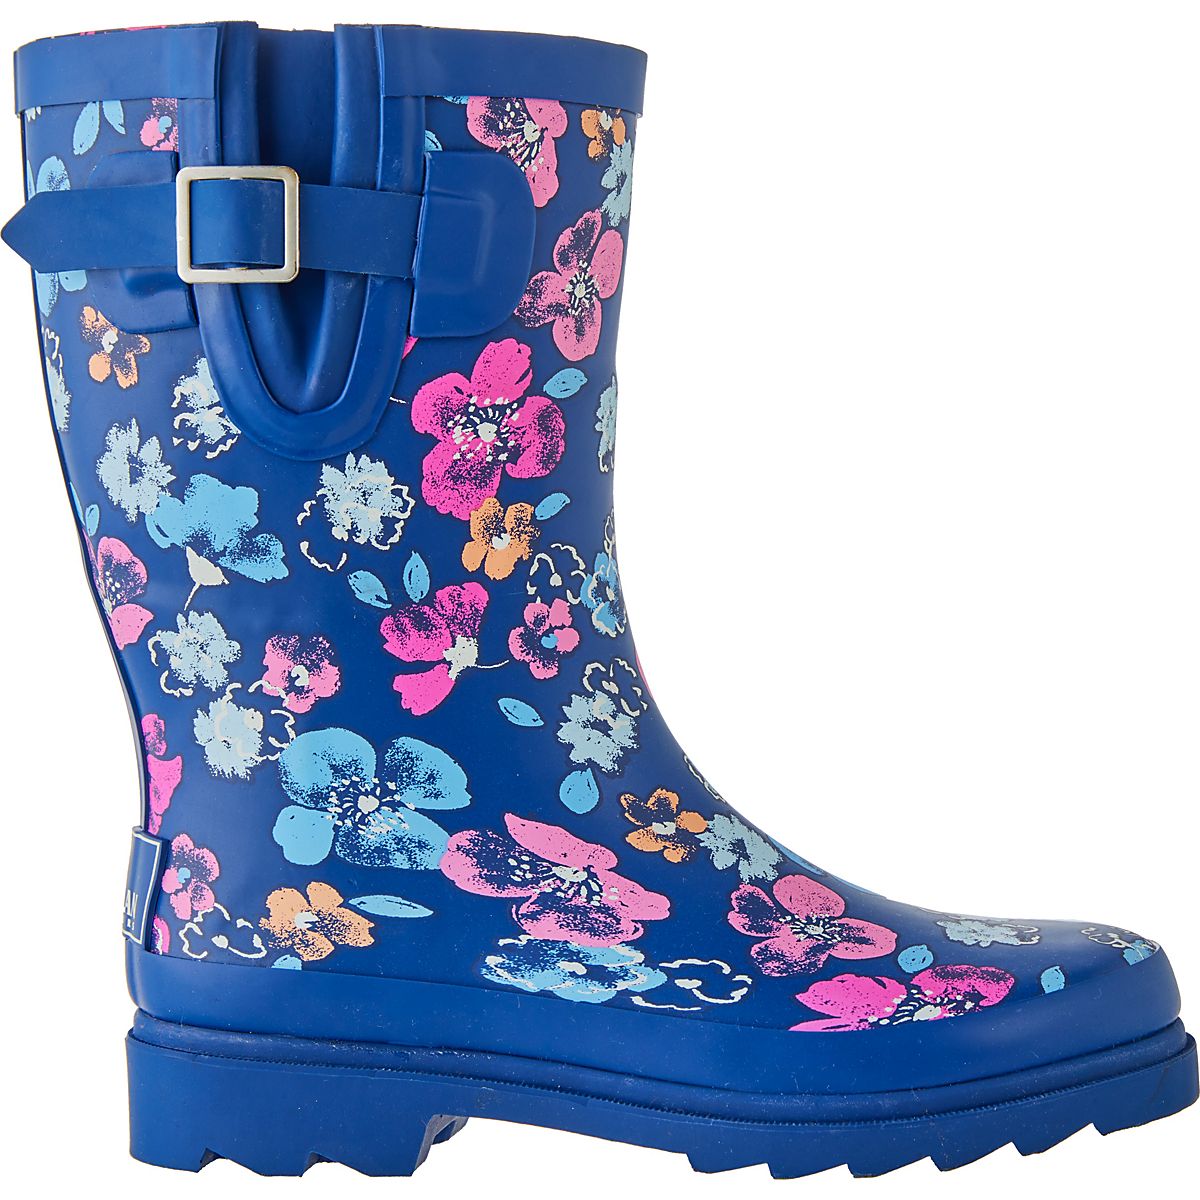 Magellan Outdoors Women's Floral Rubber Boots